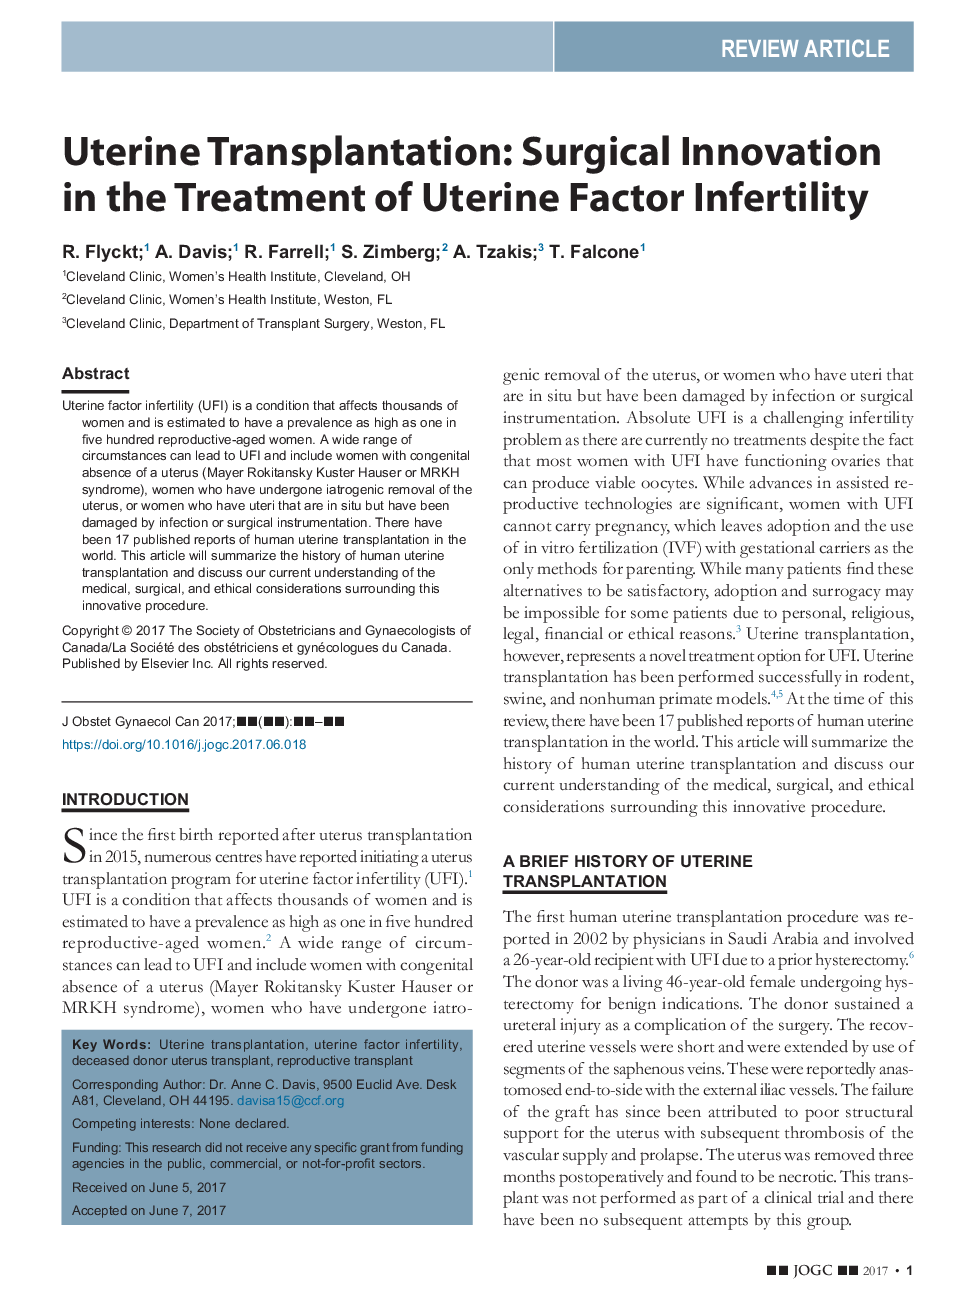 Uterine Transplantation: Surgical Innovation in the Treatment of Uterine Factor Infertility